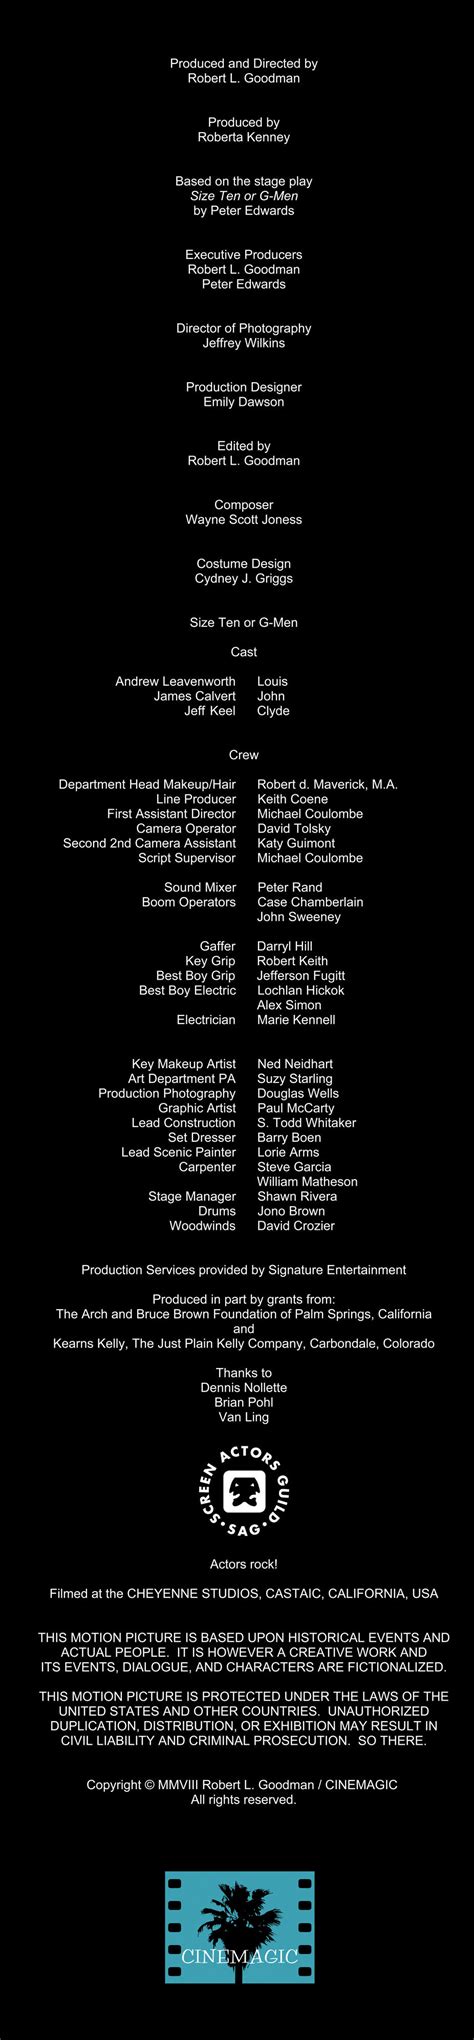 Wea Wea lyrics credits, cast, crew of song